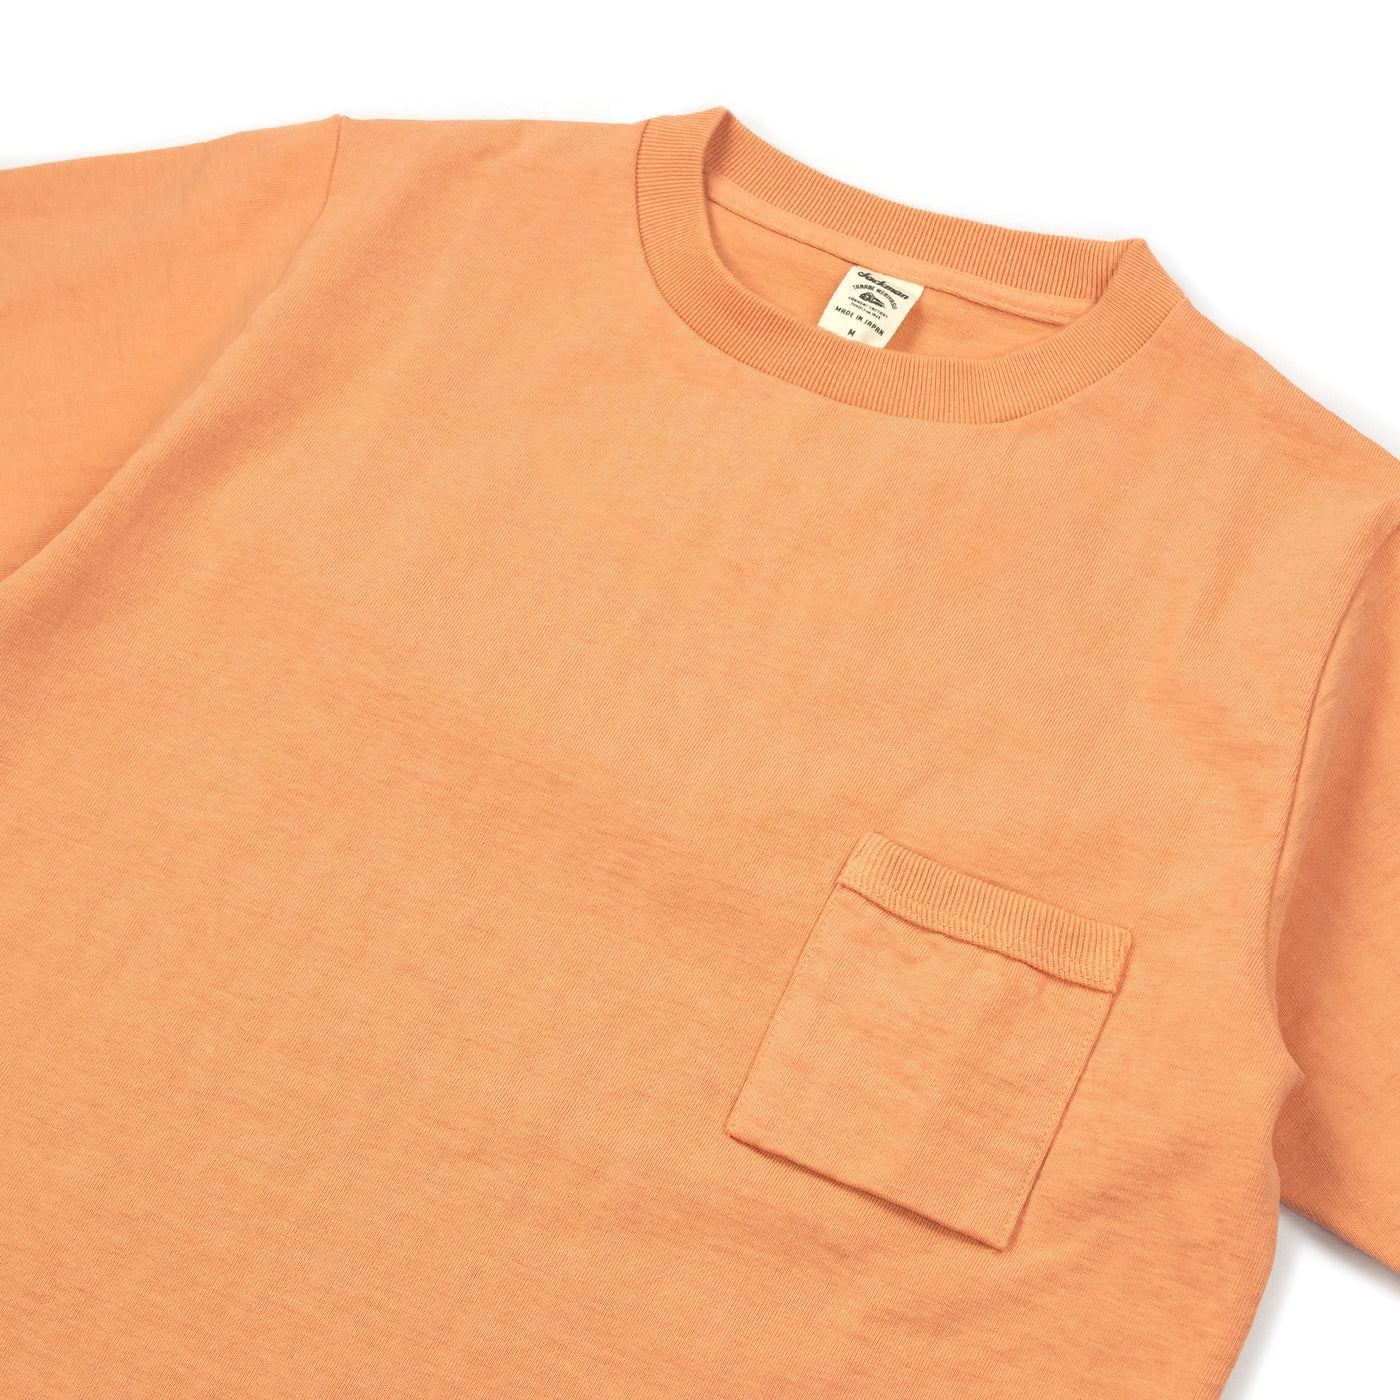 Jackman Dotsume Pocket T-Shirt Coral Pink Chest